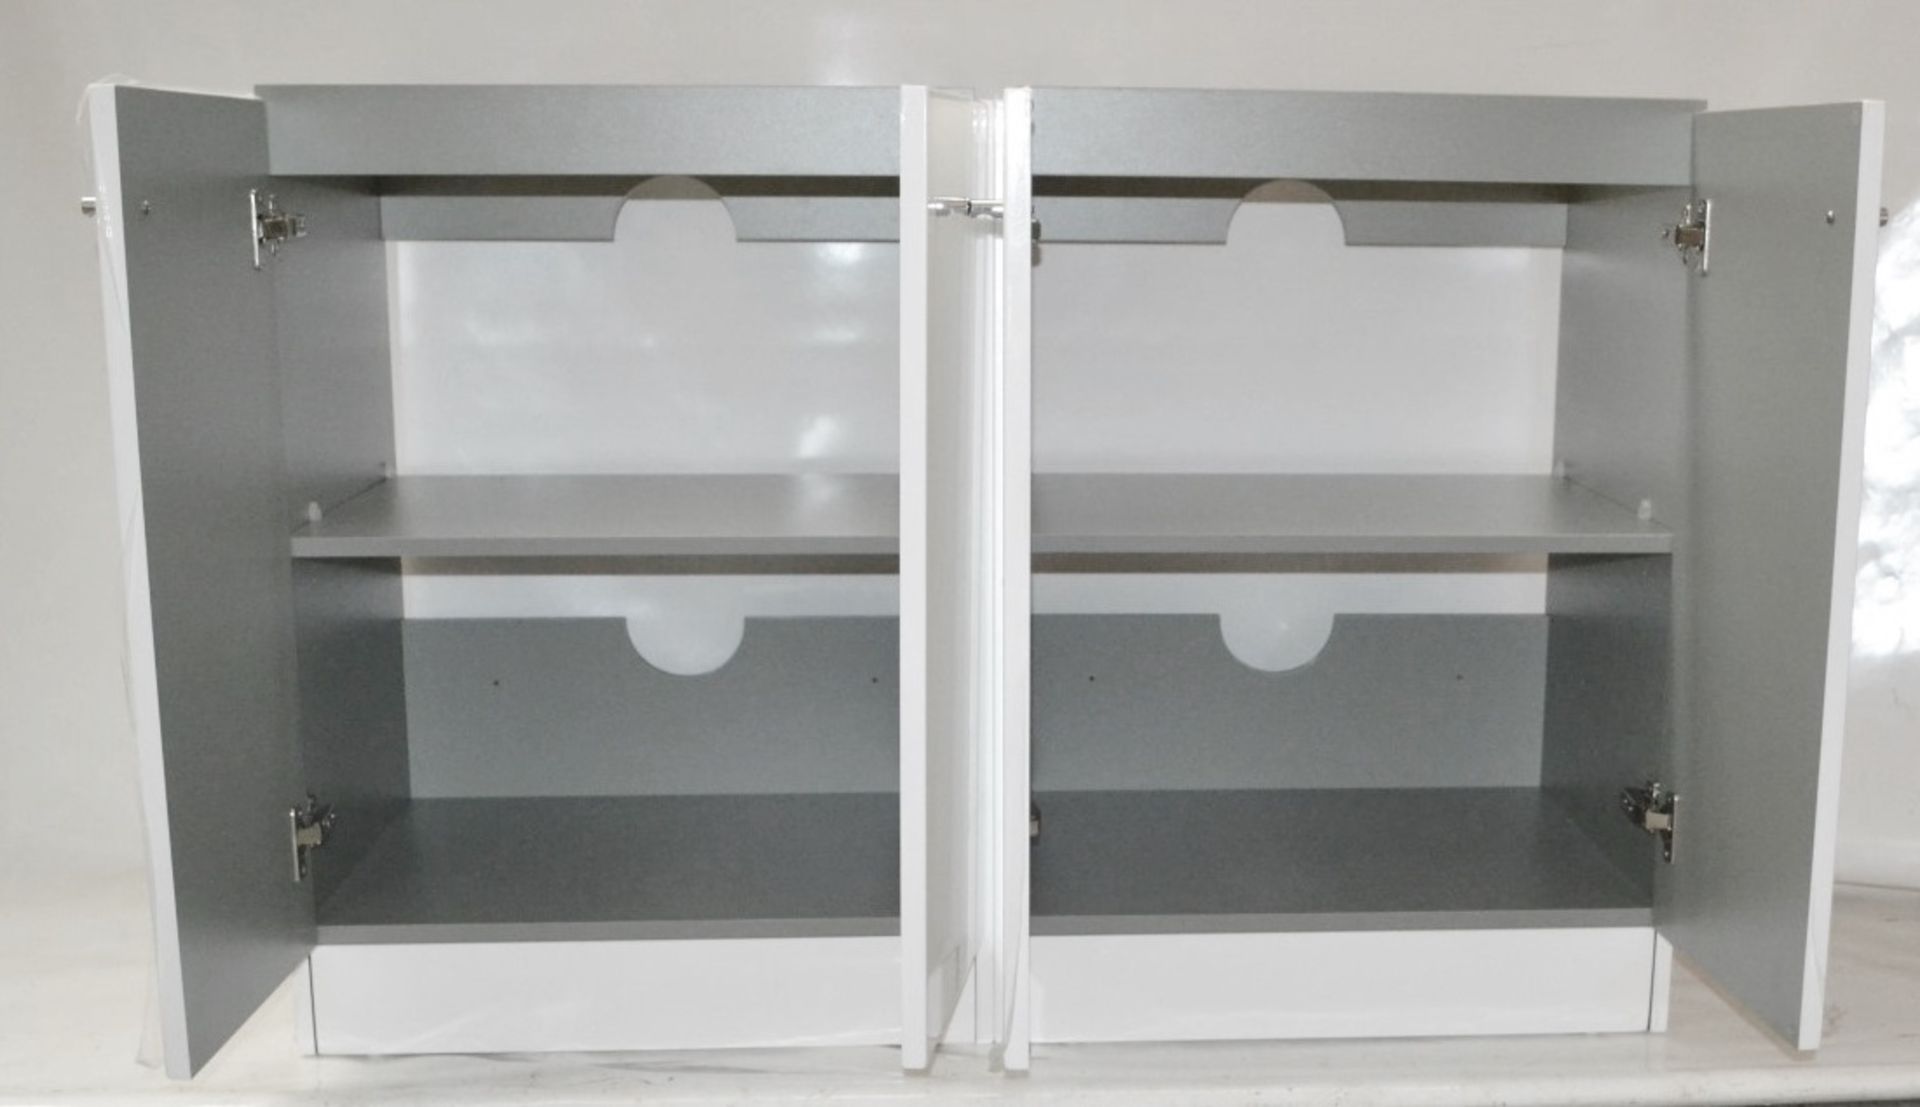 1 x Gloss White 1200mm 4-Door Double Basin Freestanding Bathroom Cabinet - CL307 - Total RRP £807.00 - Image 5 of 9